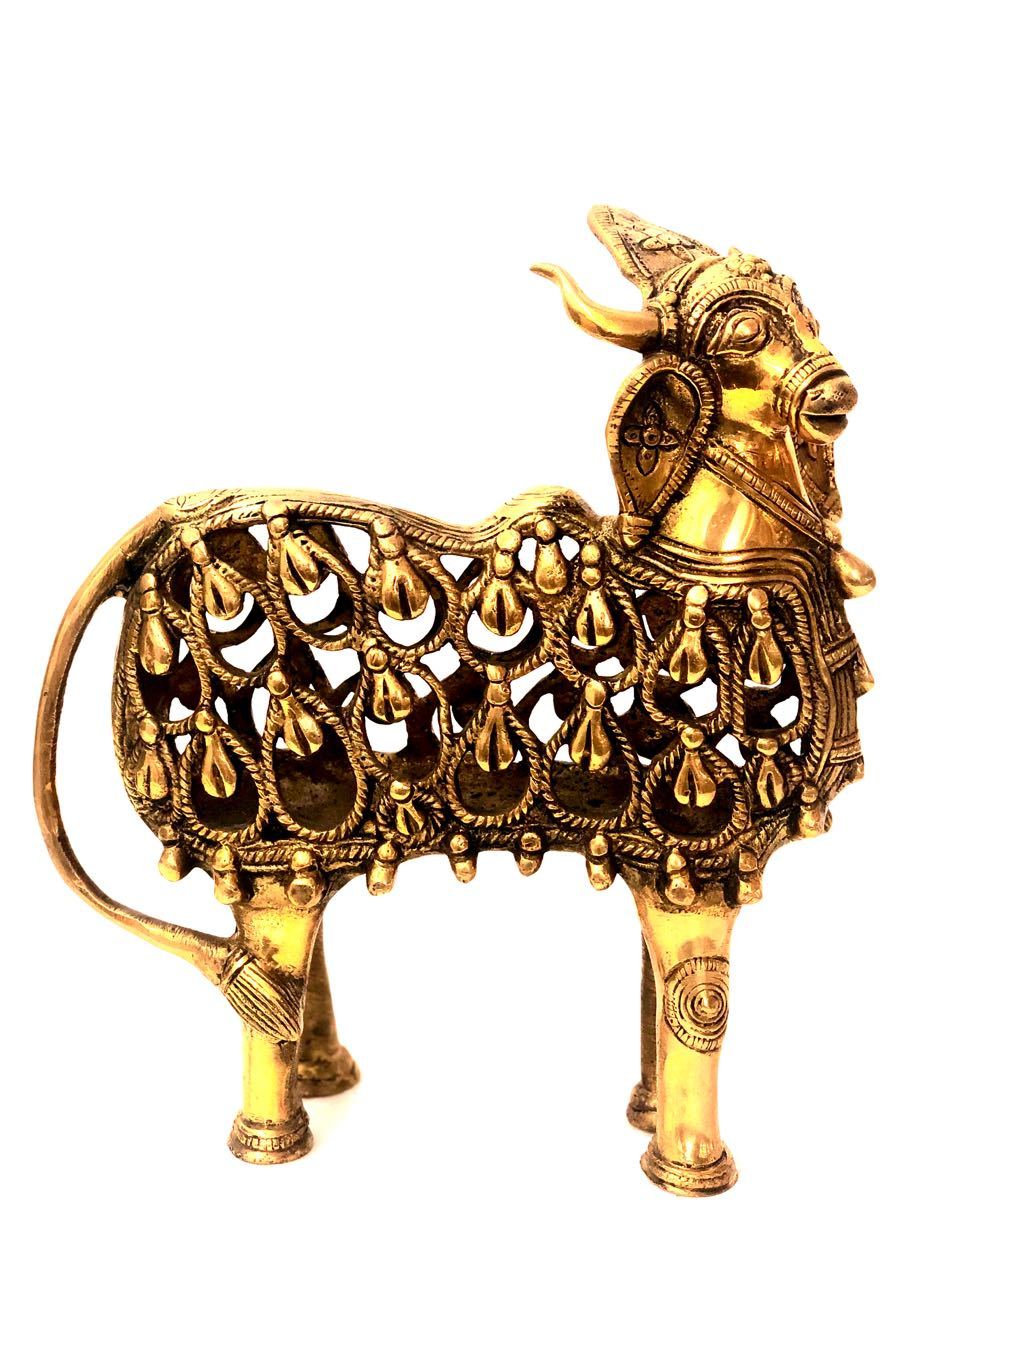 Jali Nandi 'Cow Of Plenty' Sculpture Brass Collectible Tamrapatra - Tamrapatra